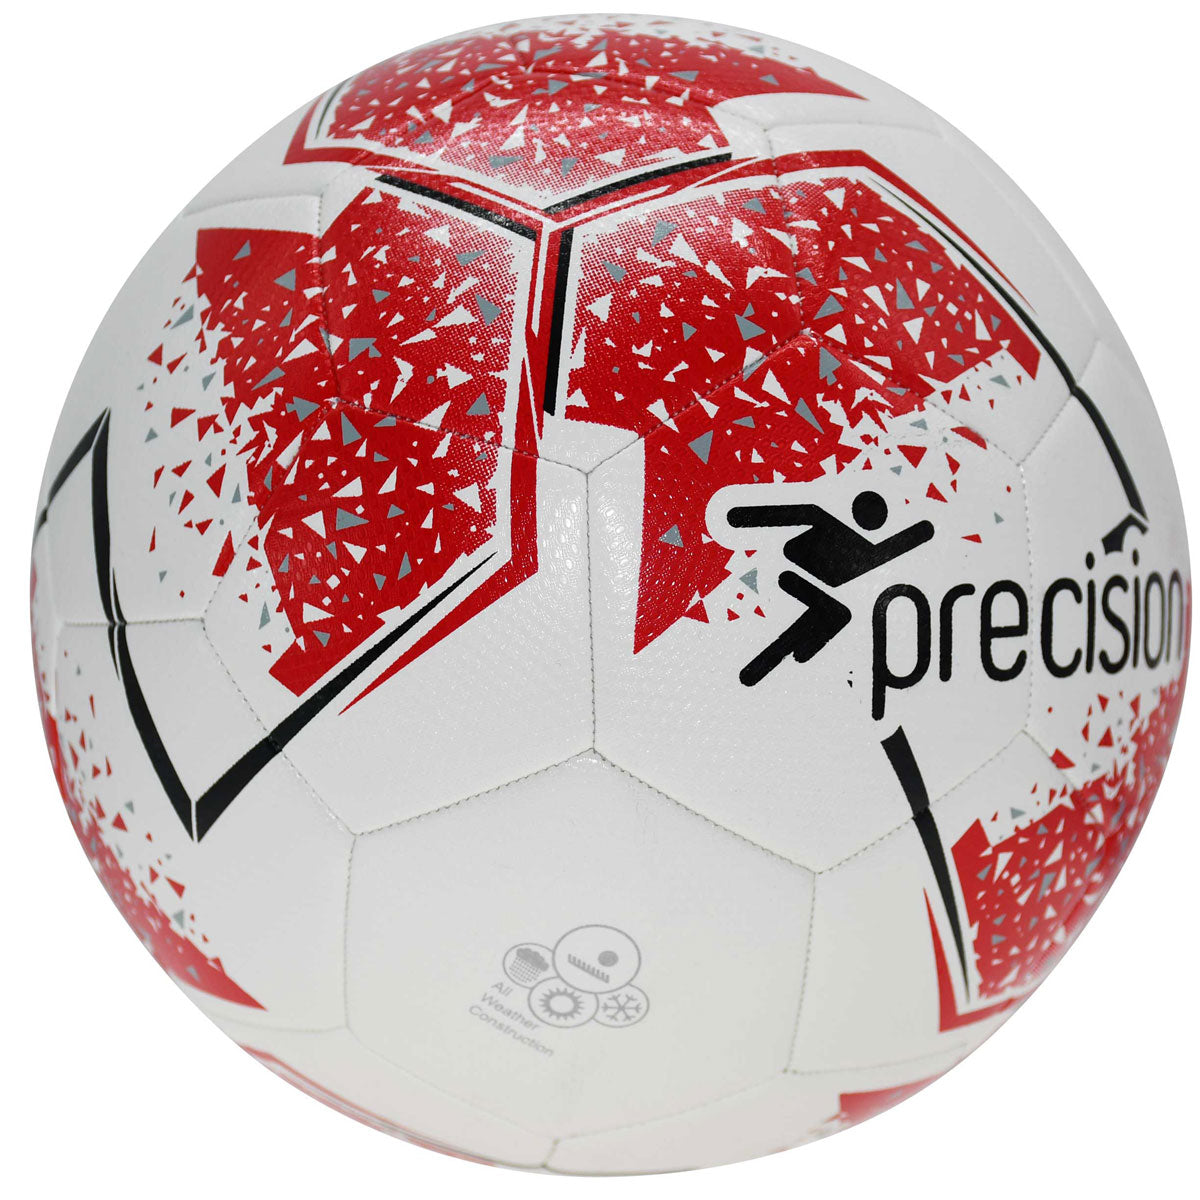 Precision Training Fusion IMS Training Ball - Size 5